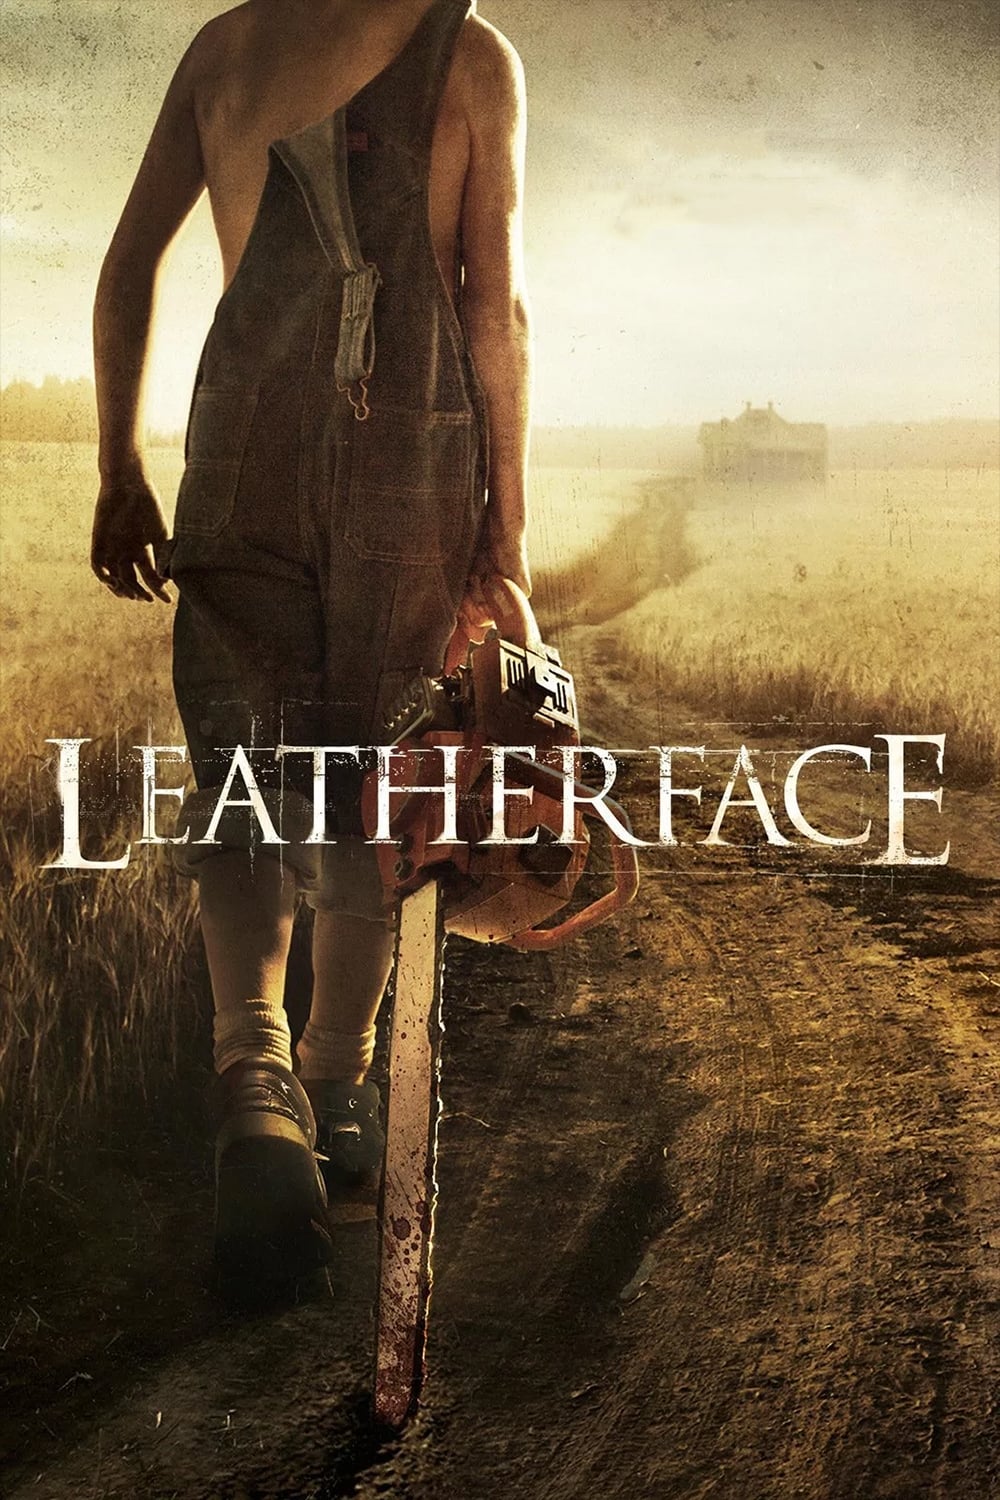 Sát Nhân Lưỡi Cưa (Leatherface) [2017]